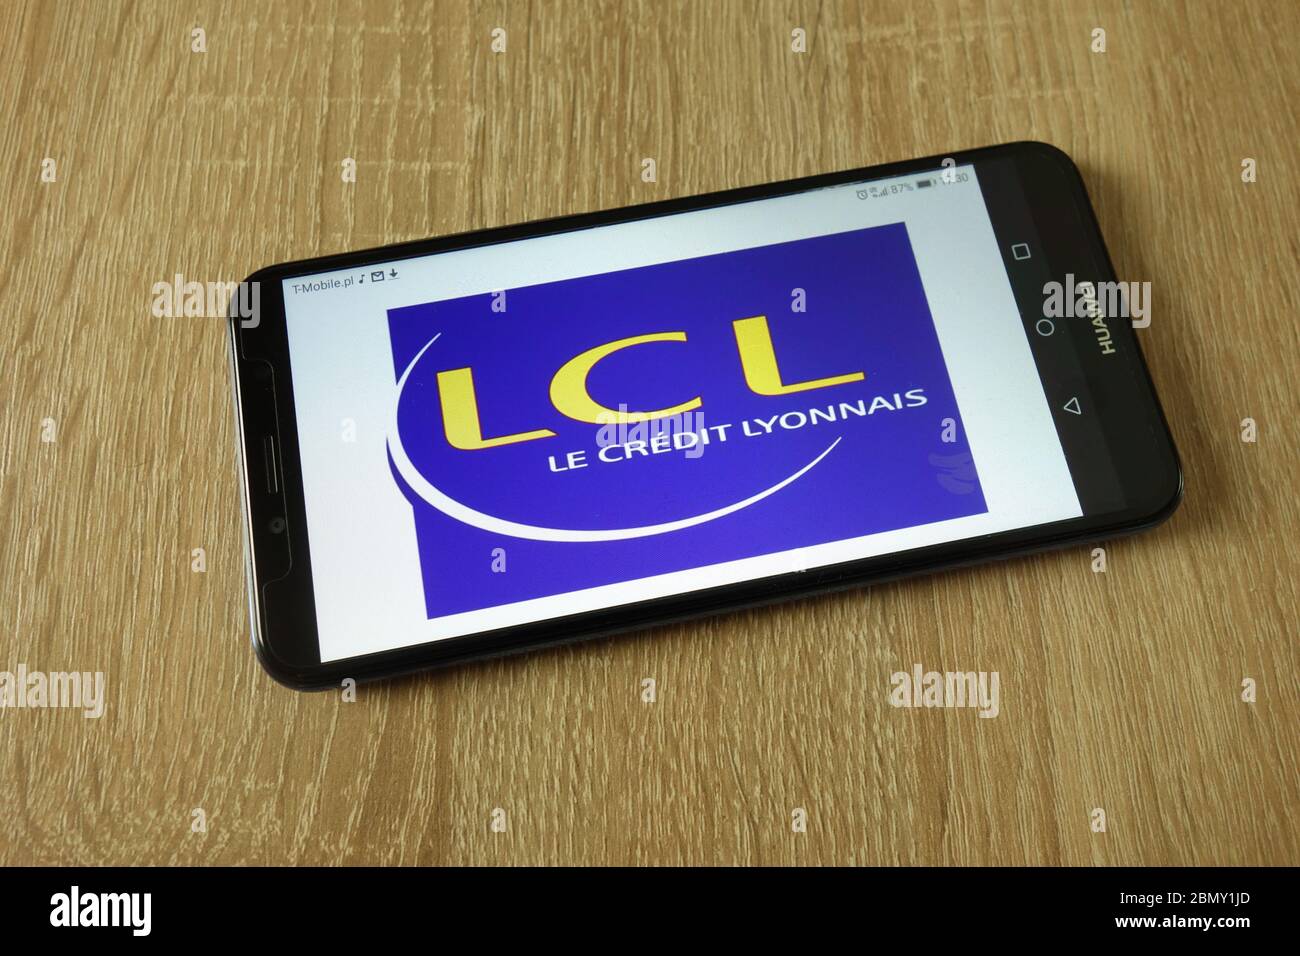 Credit Lyonnais bank logo displayed on smartphone Stock Photo